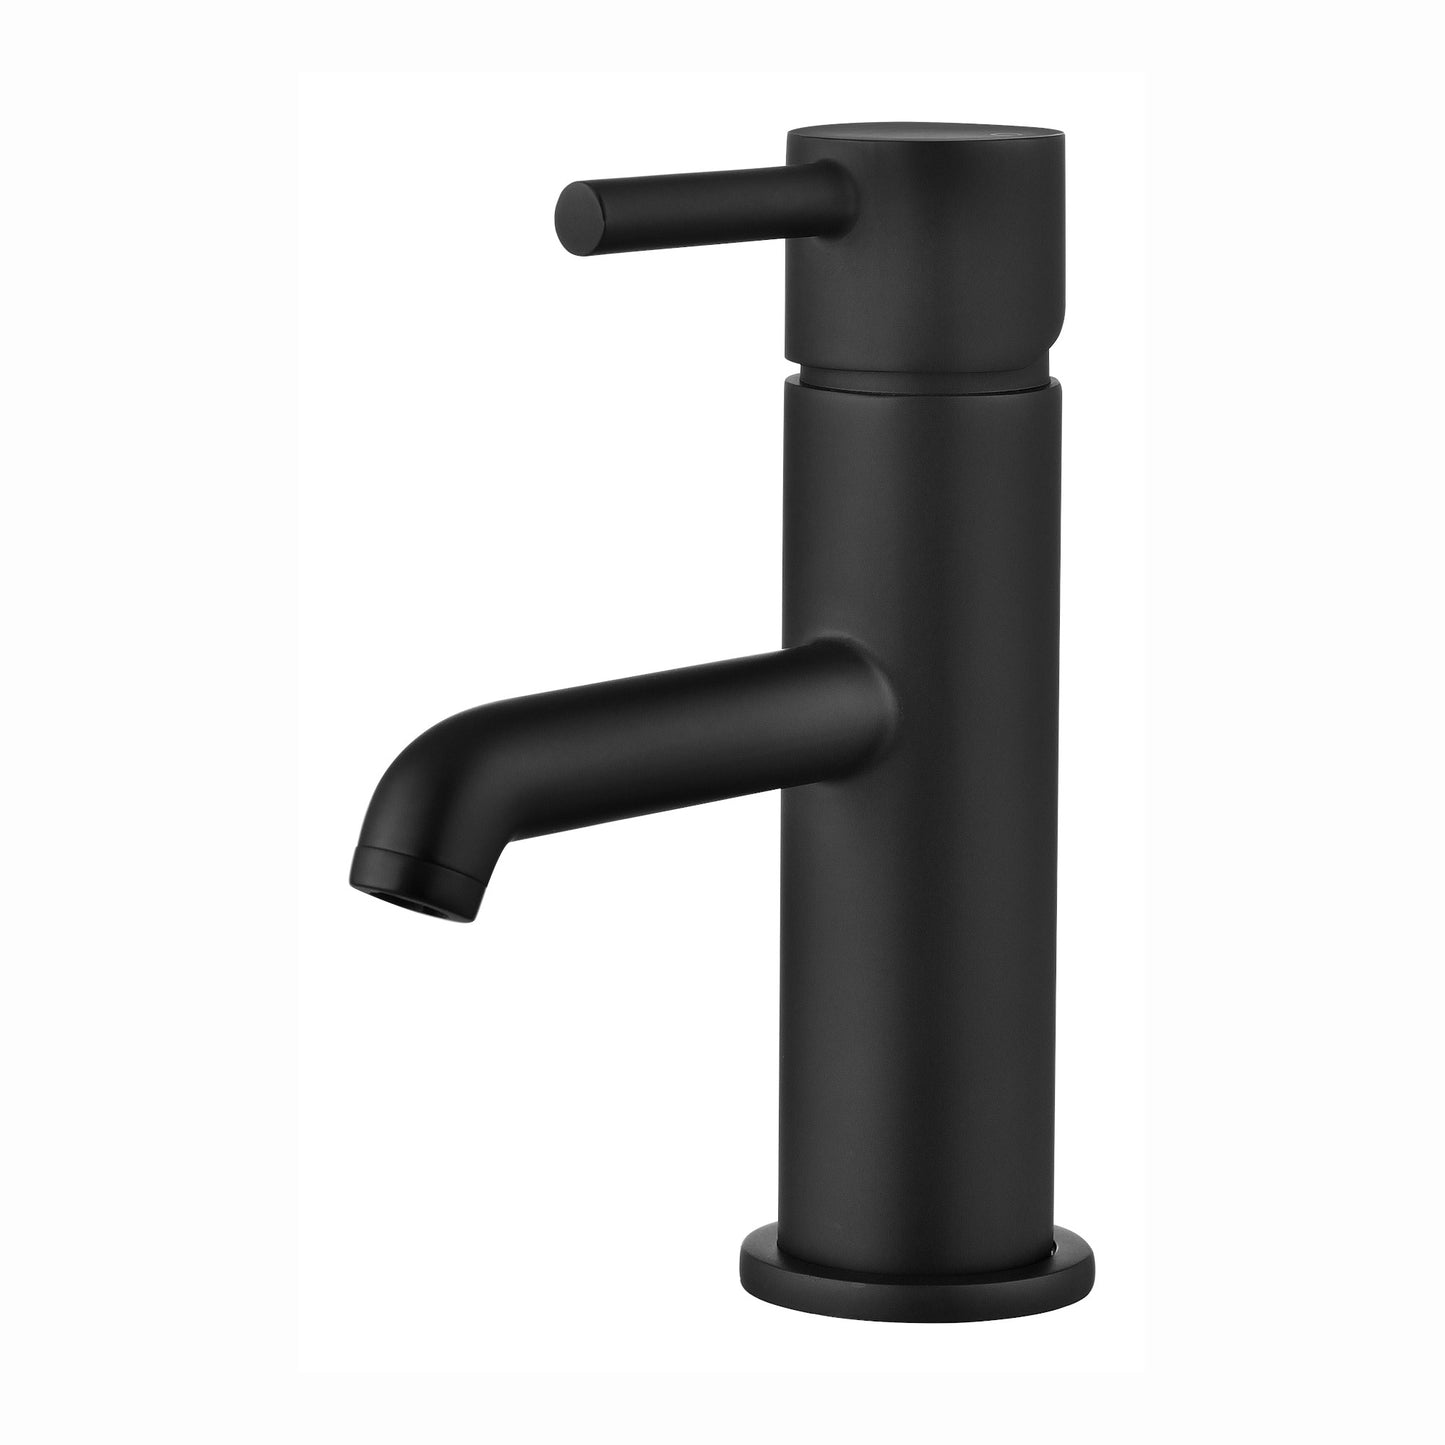 Zara basin mixer tap - matte black